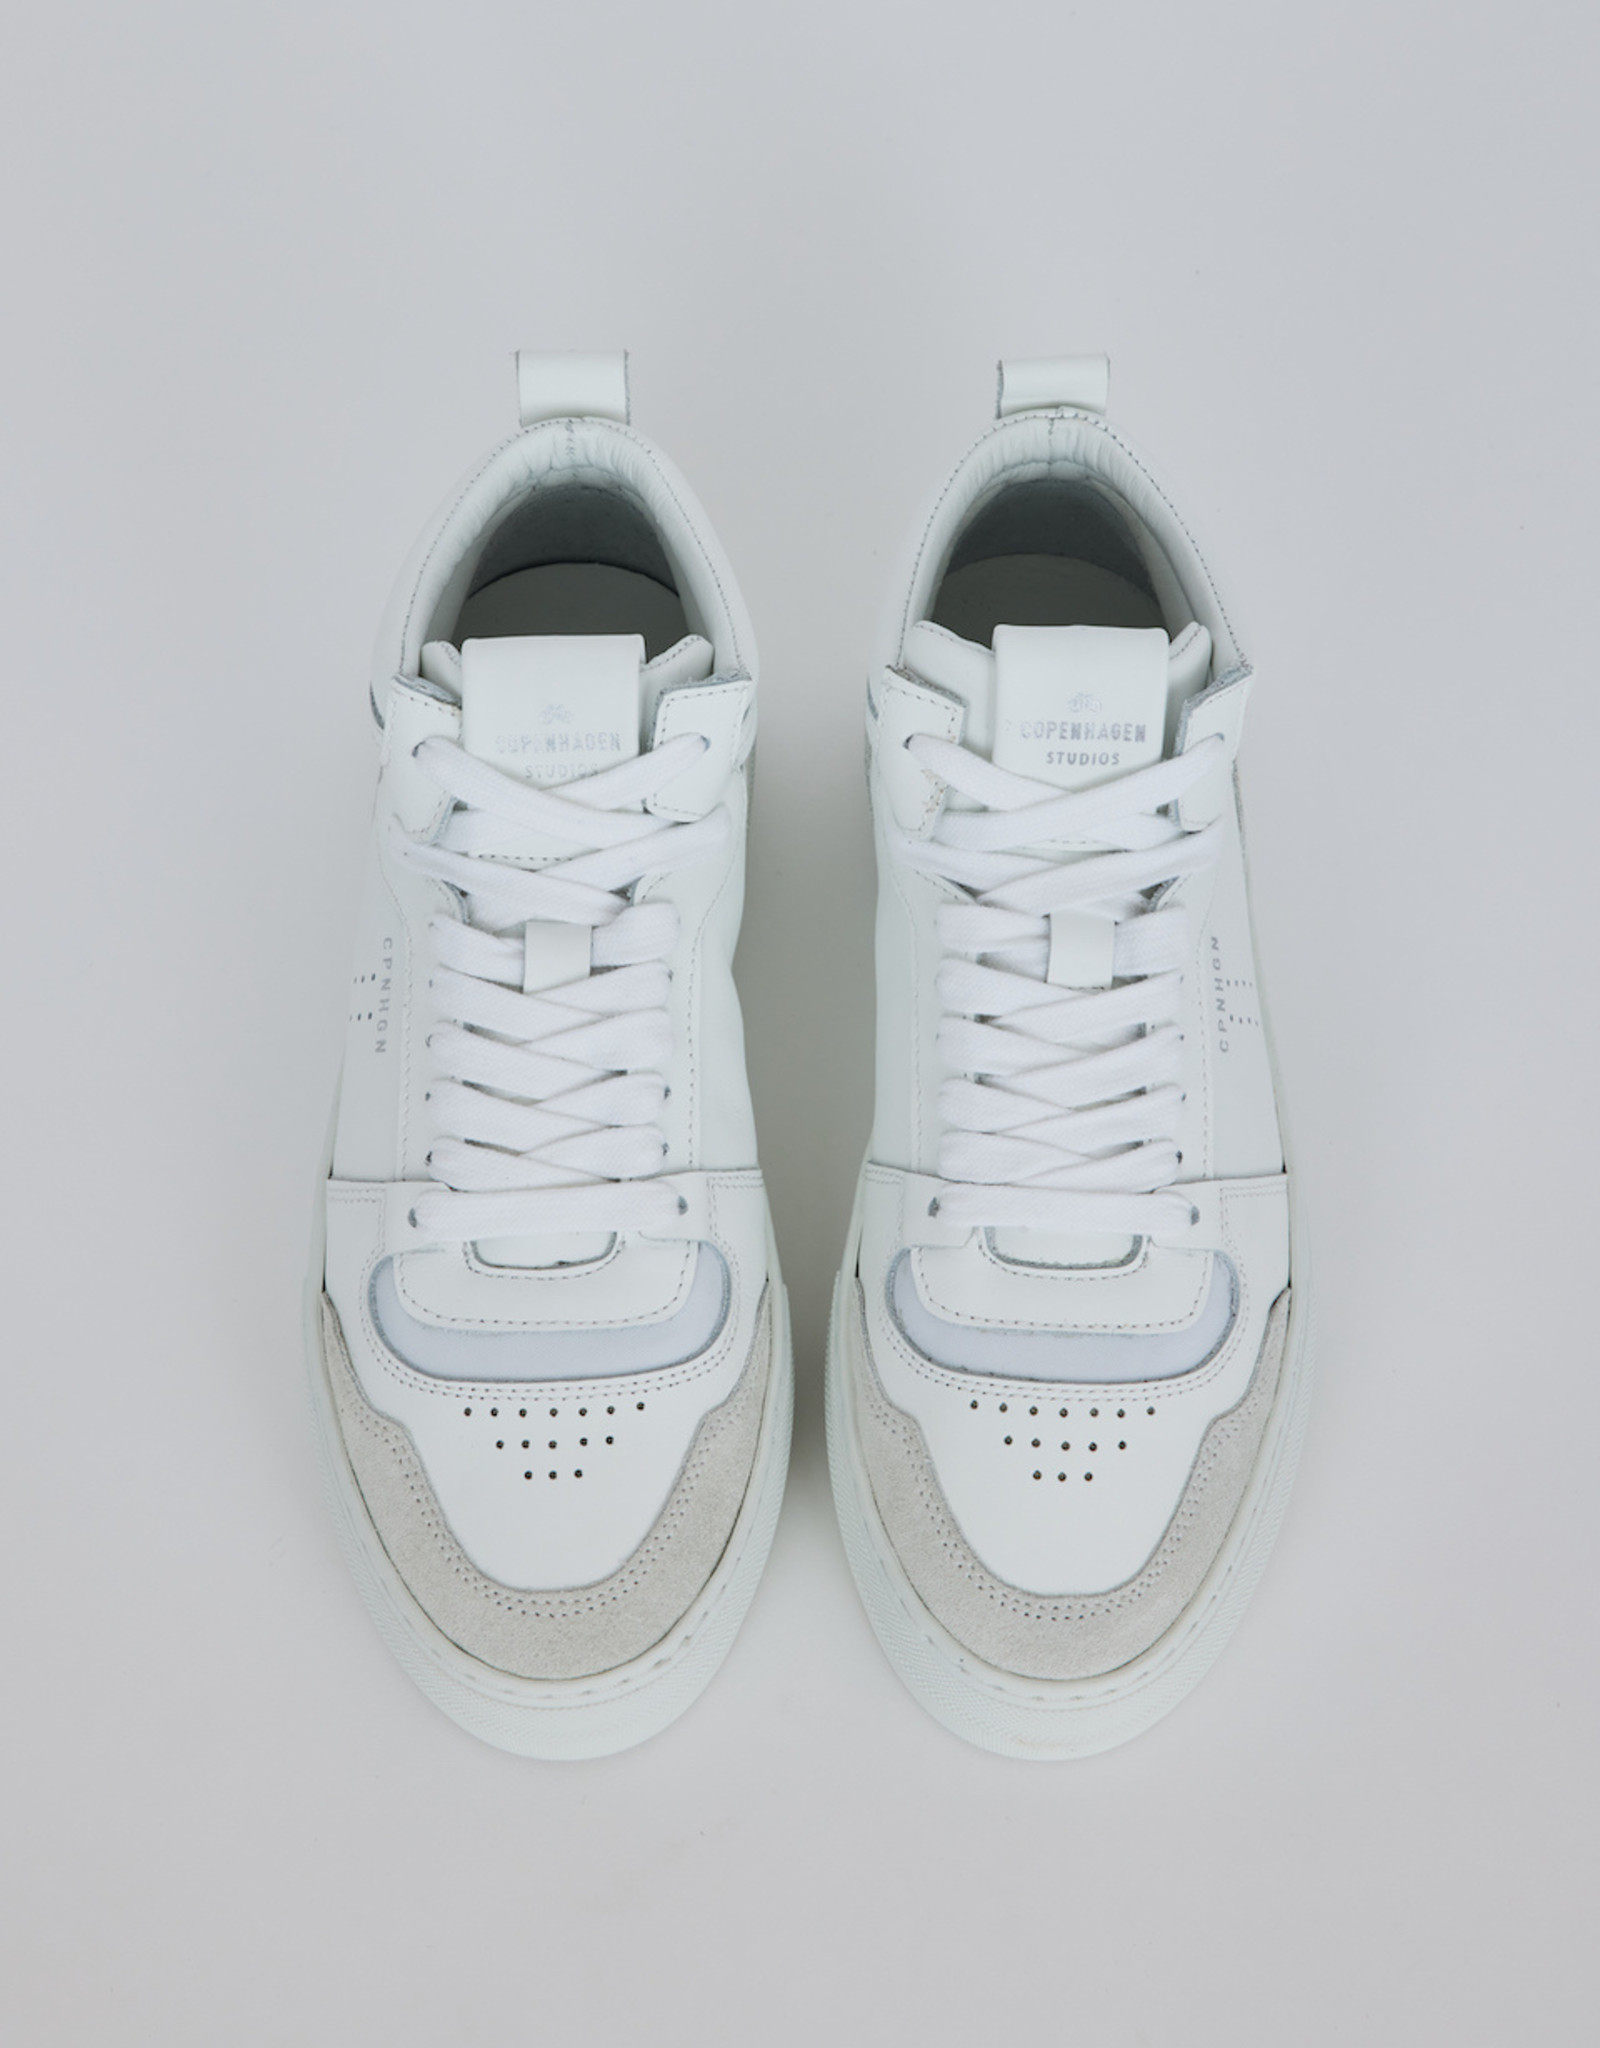 Copenhagen Studios sneaker 'CPH684' leather - white